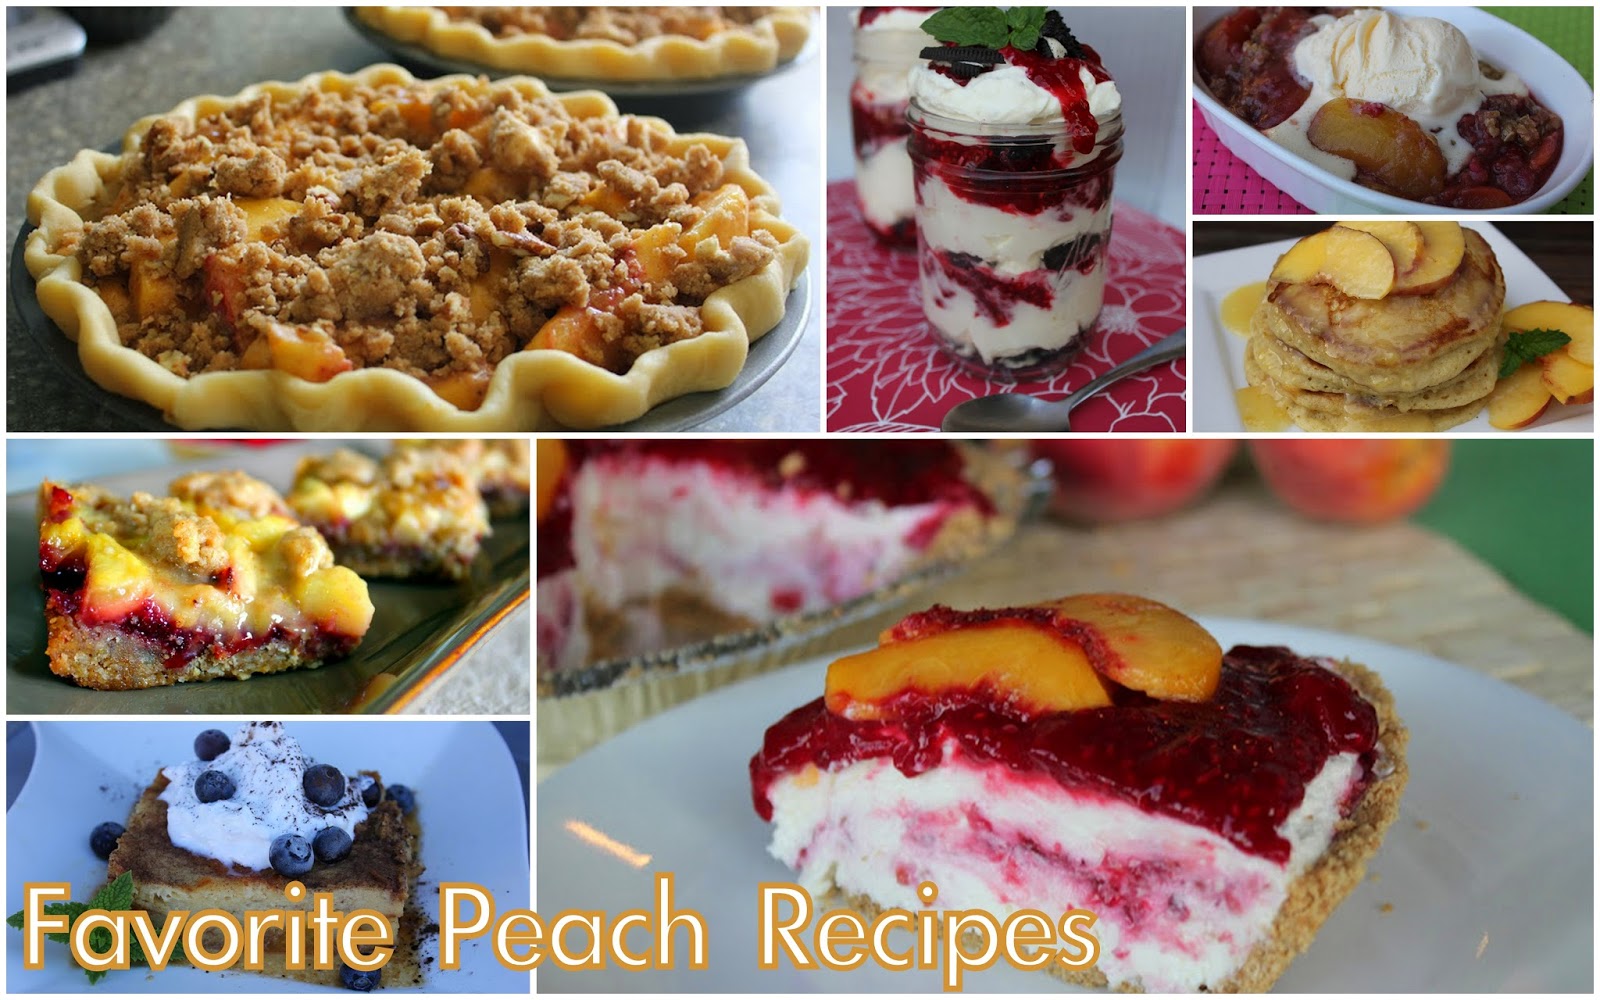 Favorite Peach Recipes, Recipe: Cake, Recipe: Dessert, Recipe: Fruit, plums, peaches, Americas Test Kitchen Peach Summer Cake, Copycat Recipes, Deals to Meals, 